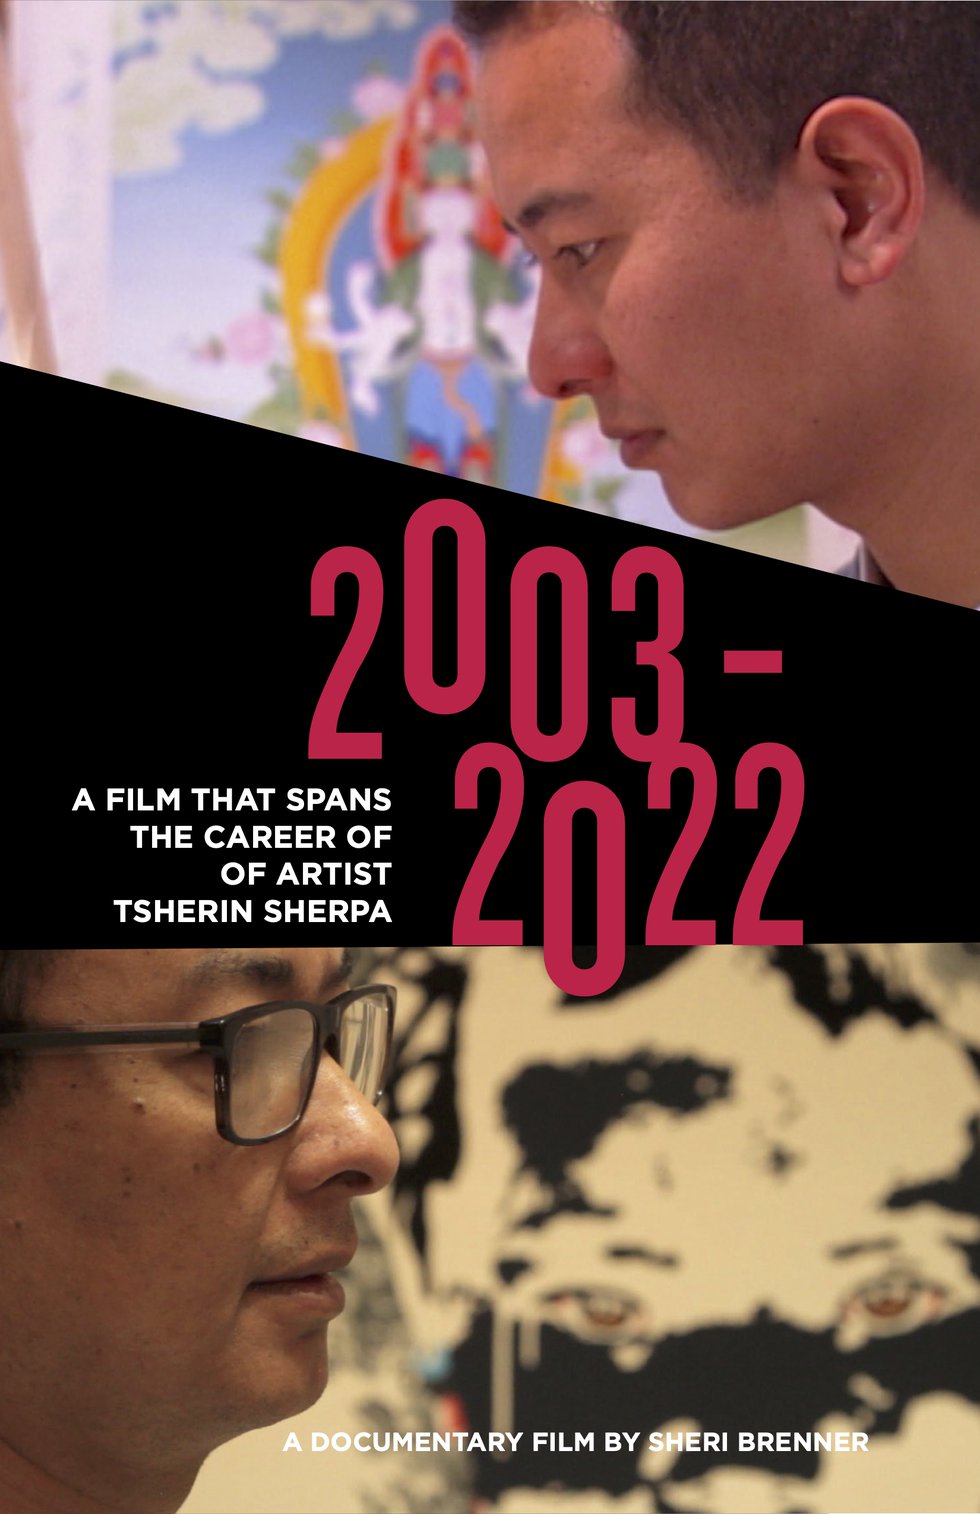 Poster 1_2003-2022 copy.png